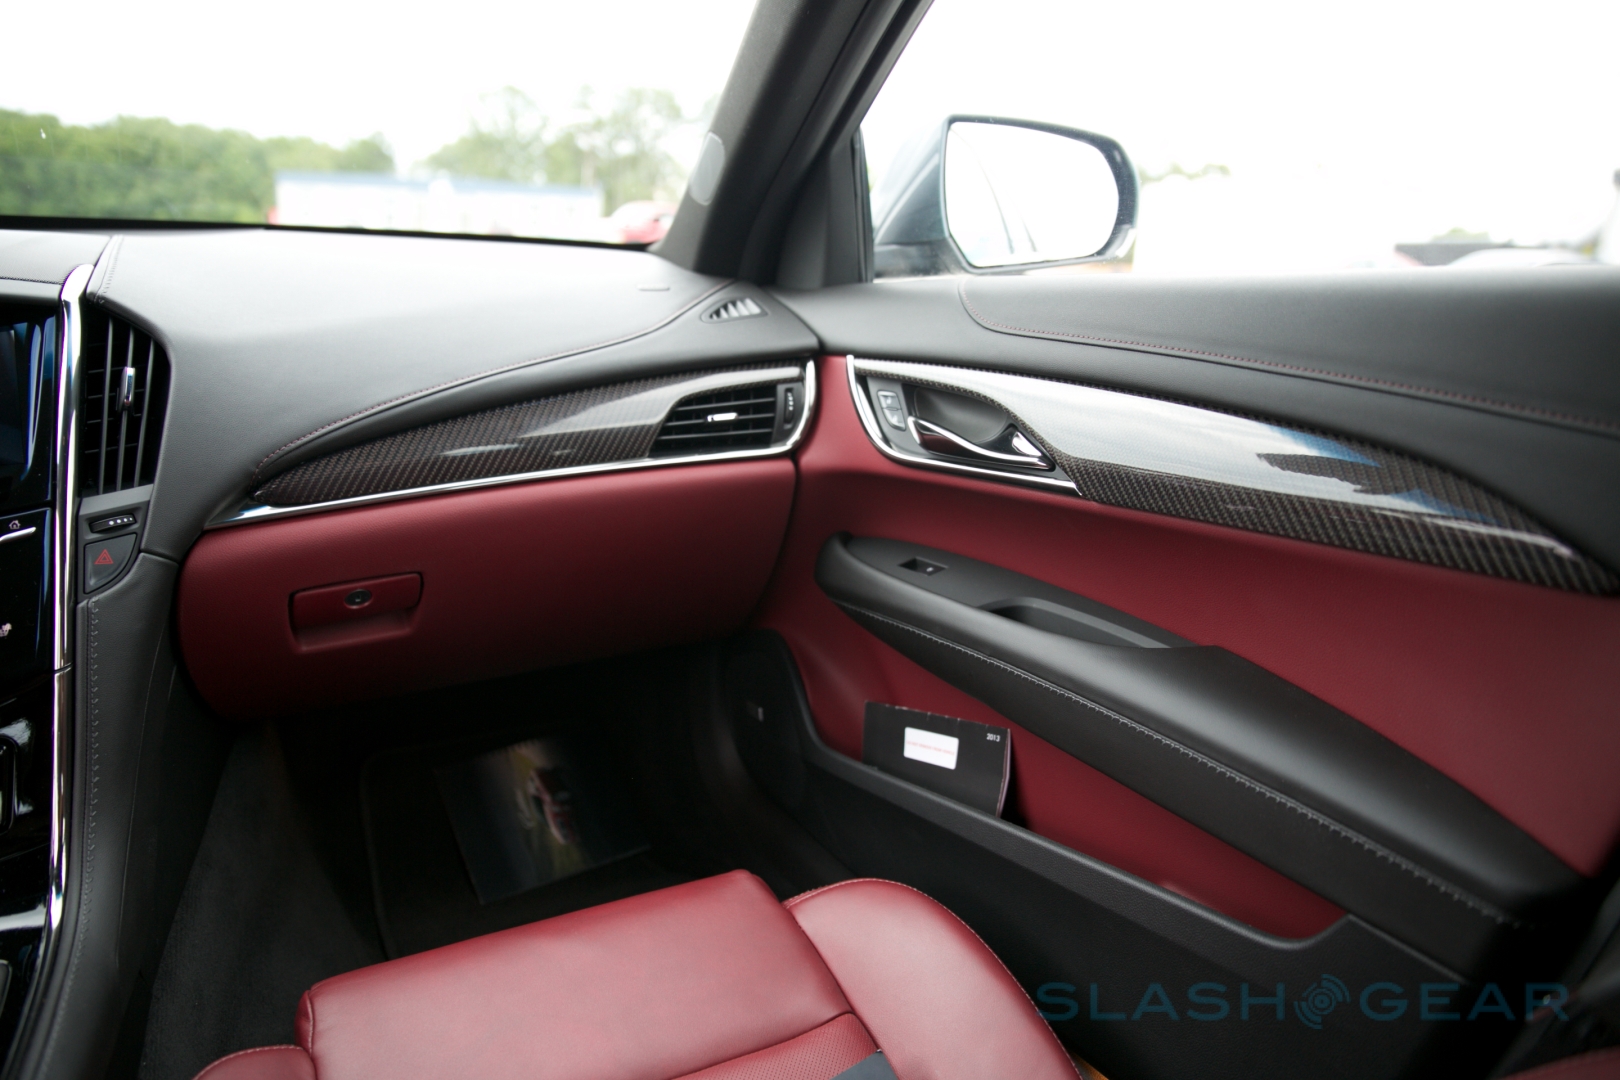 2013 Cadillac Ats Review Video Slashgear